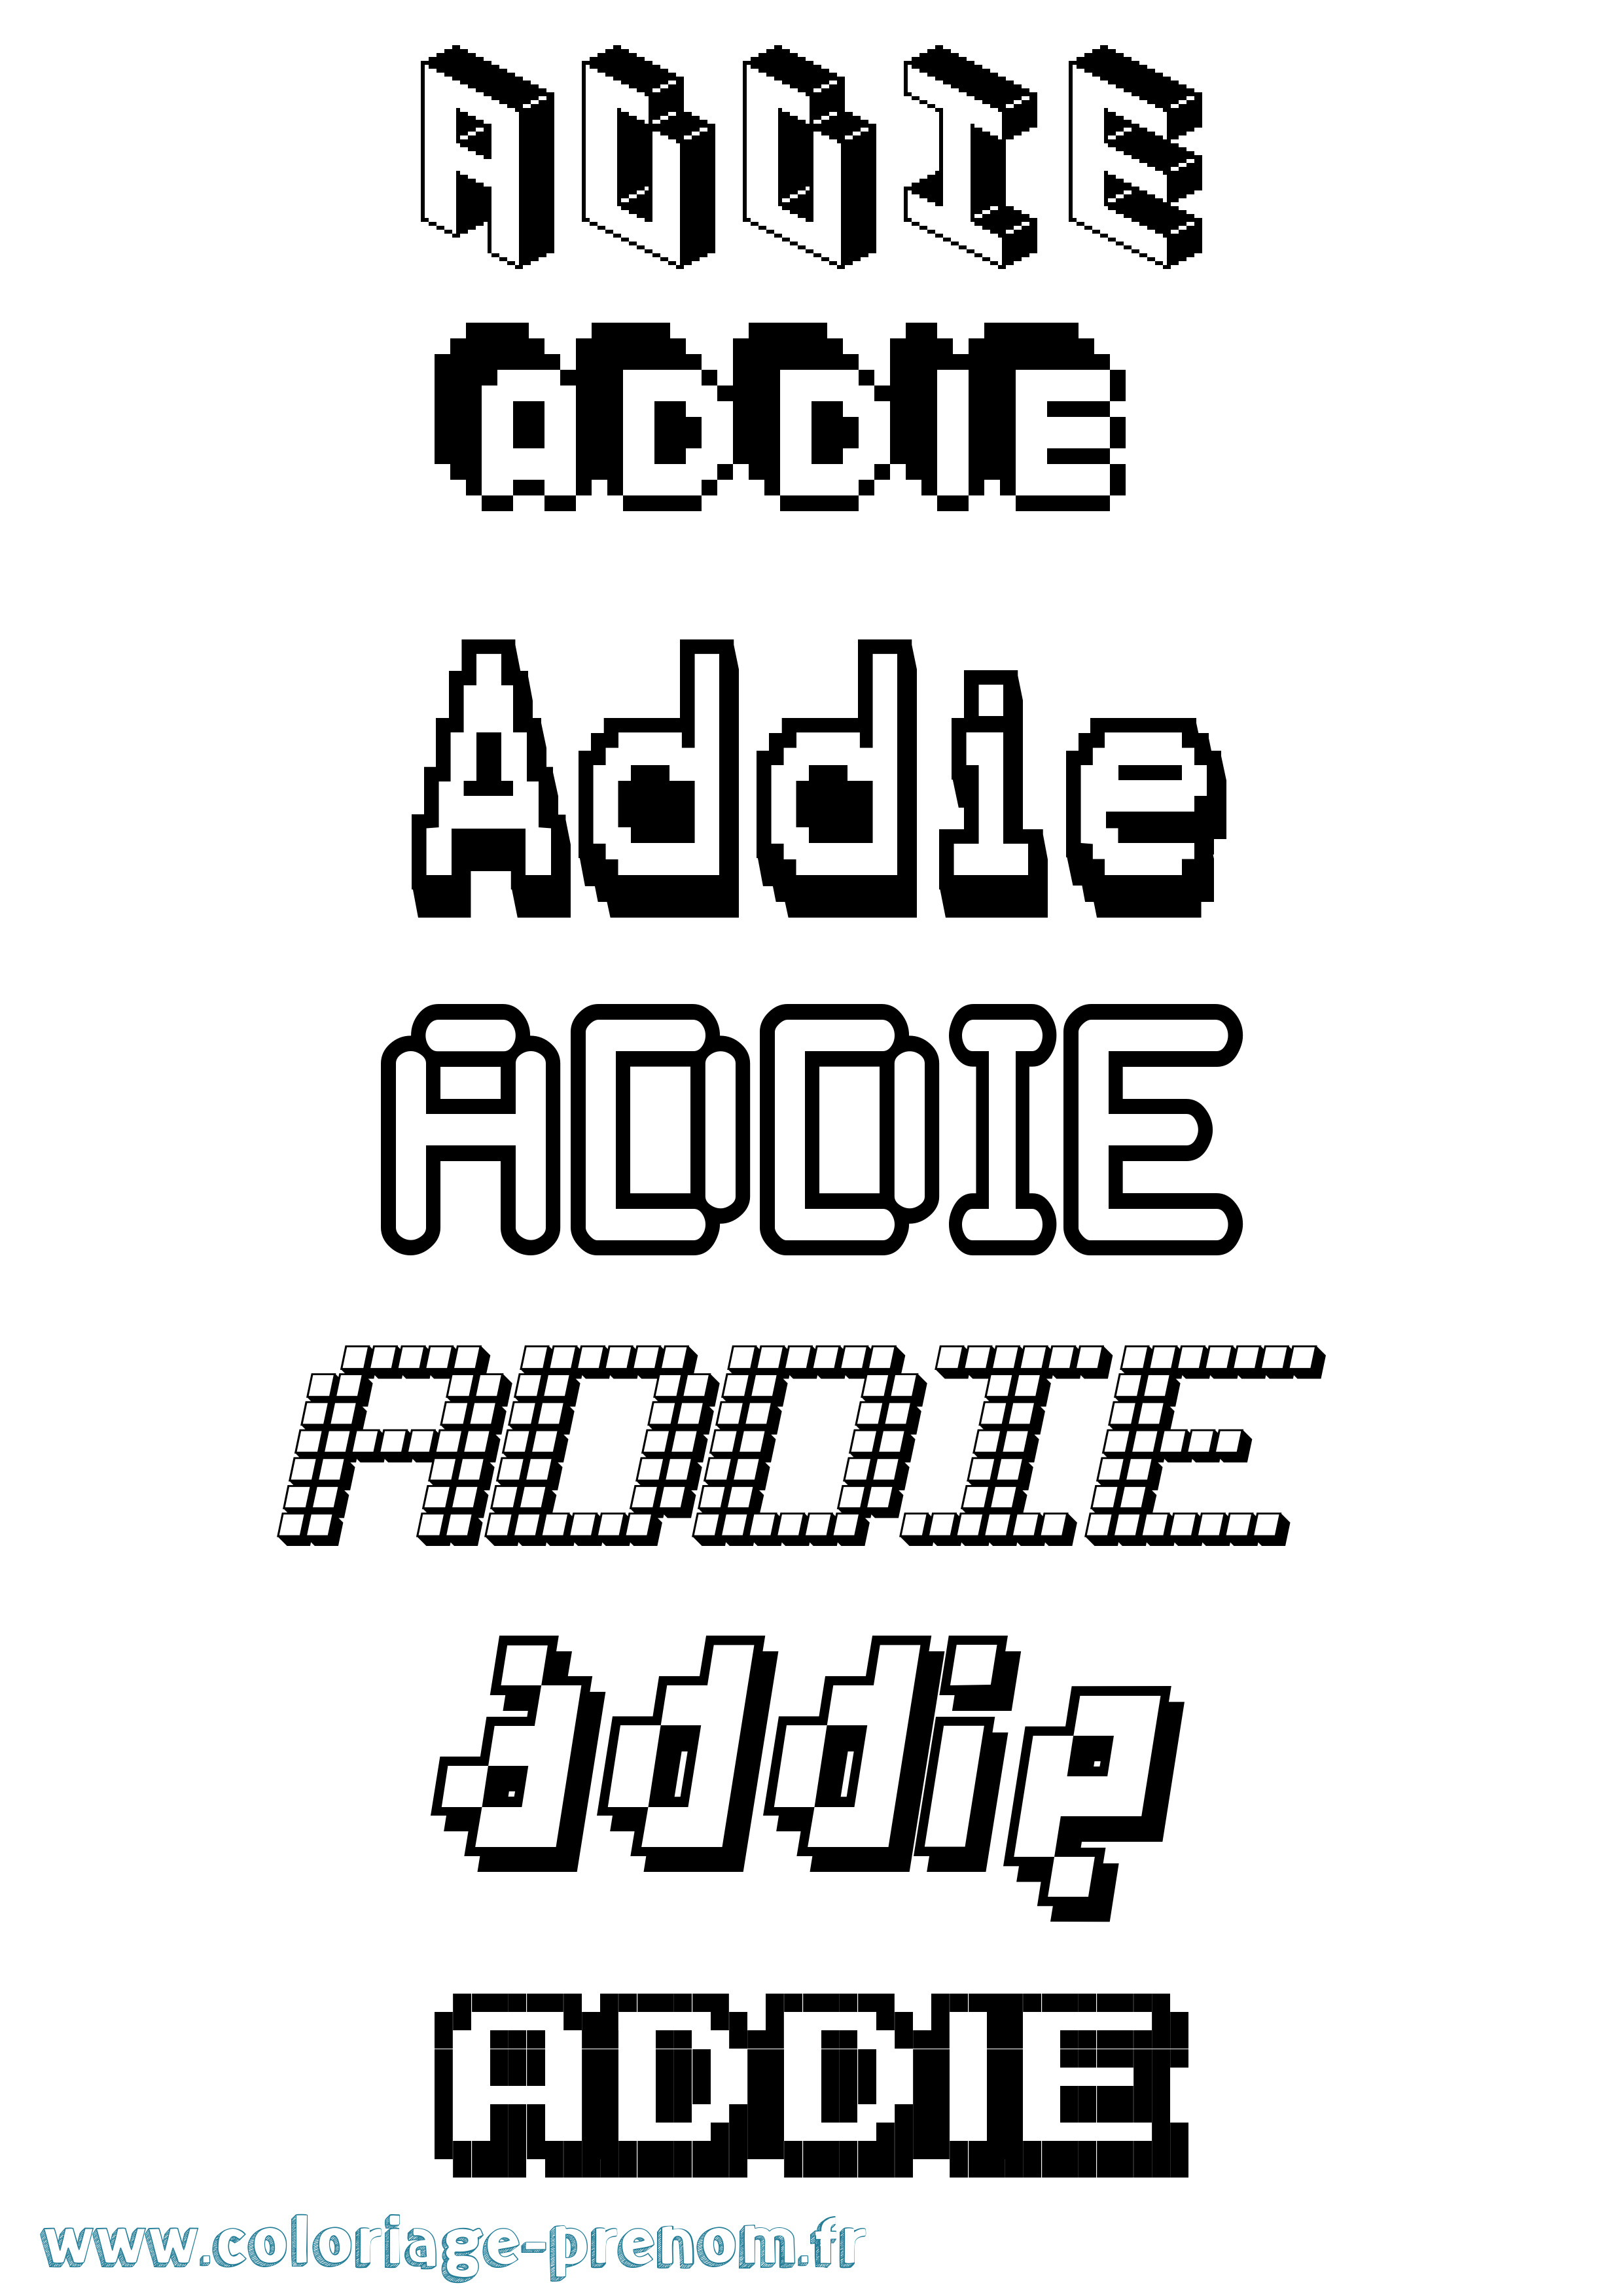 Coloriage prénom Addie Pixel